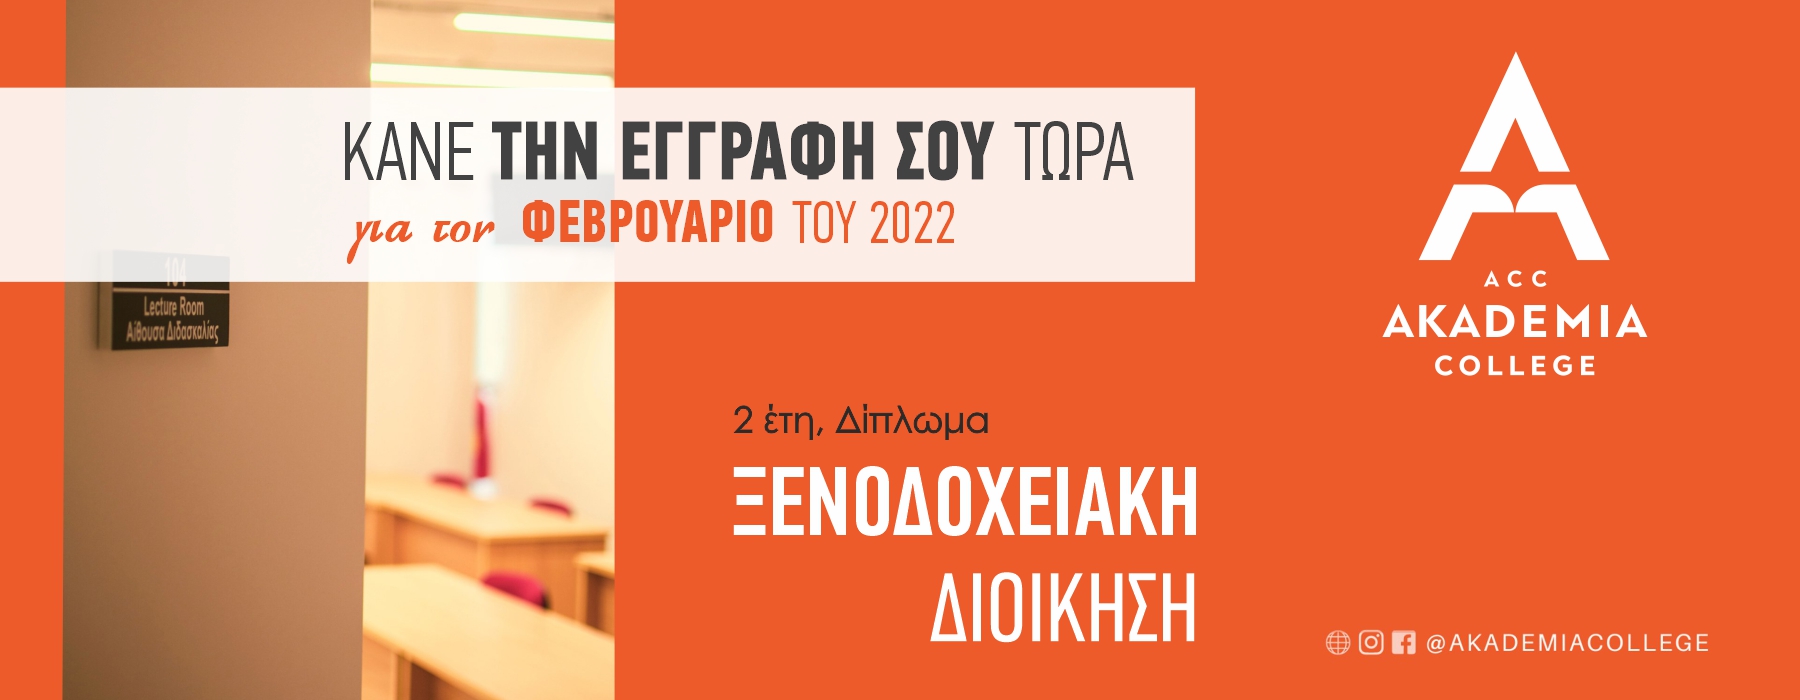 web-banner-fthinoporo-2022